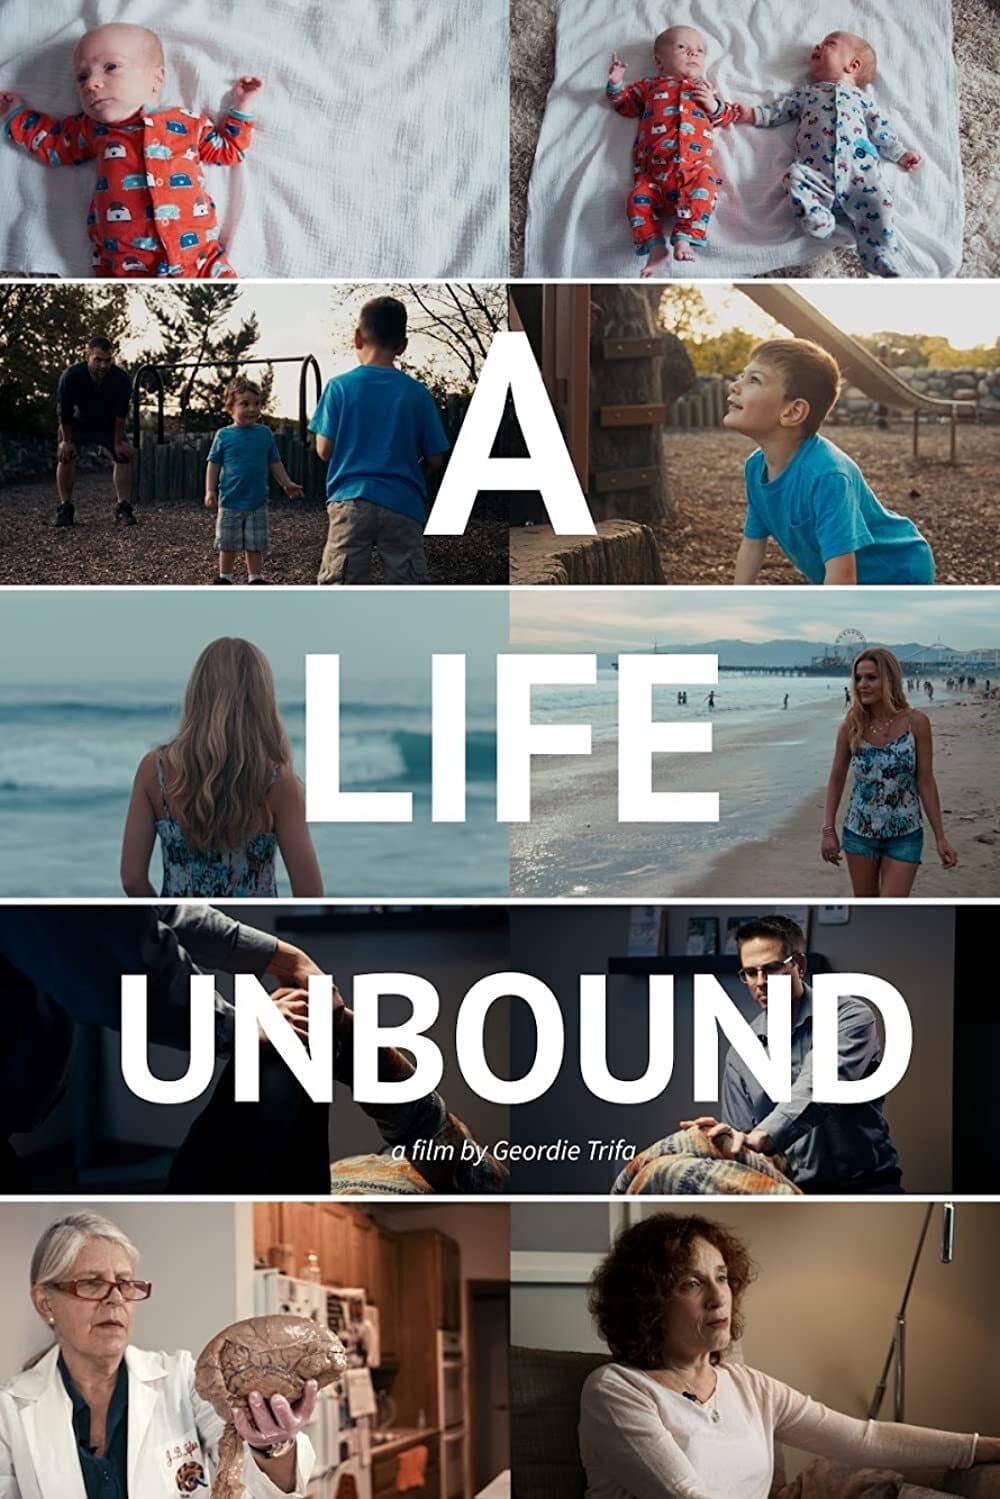 A Life Unbound